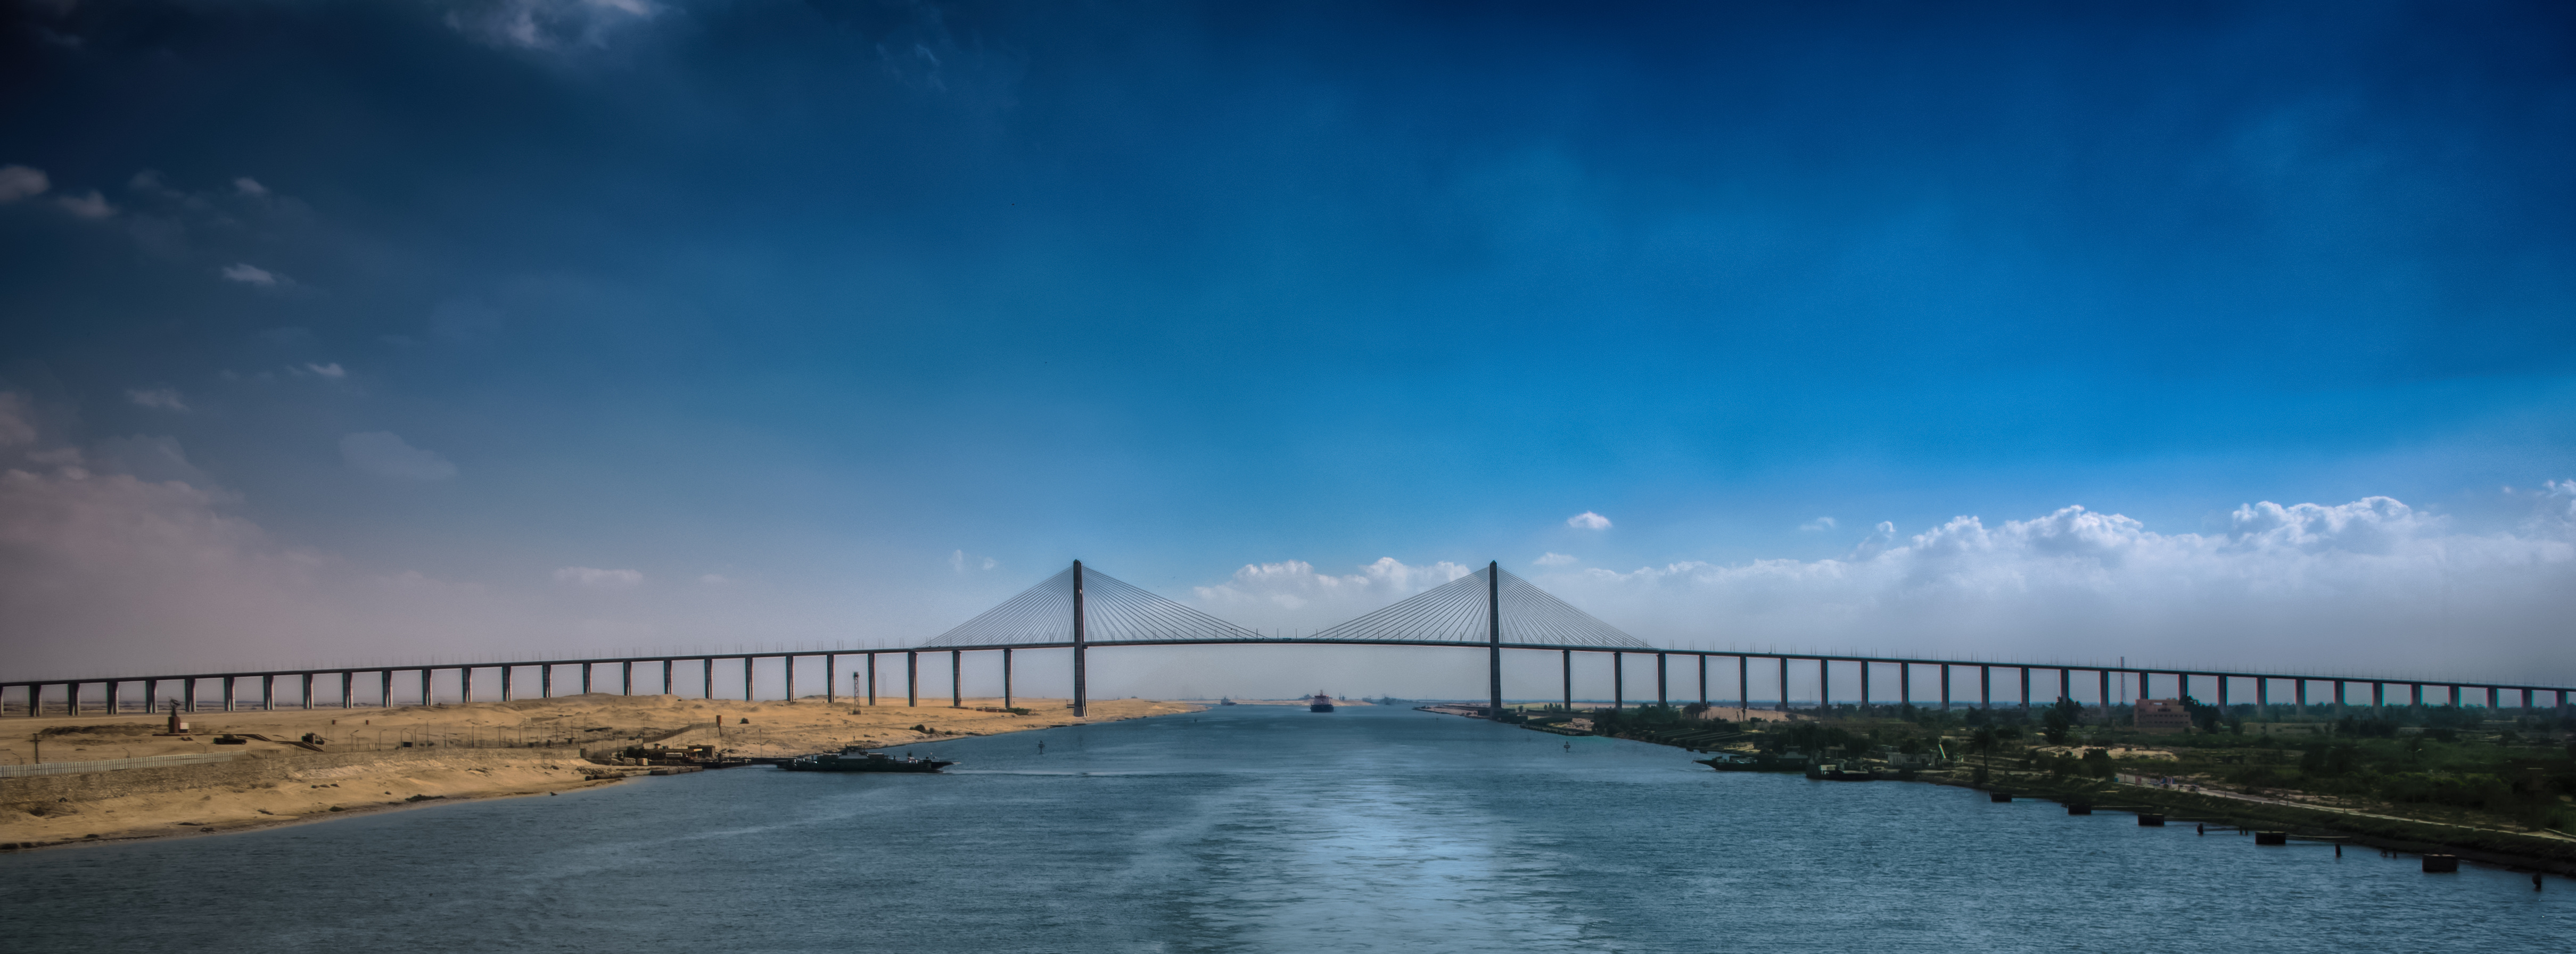 Foto Suez Kanal Brücke, Krise, Resilienz, Ever Given